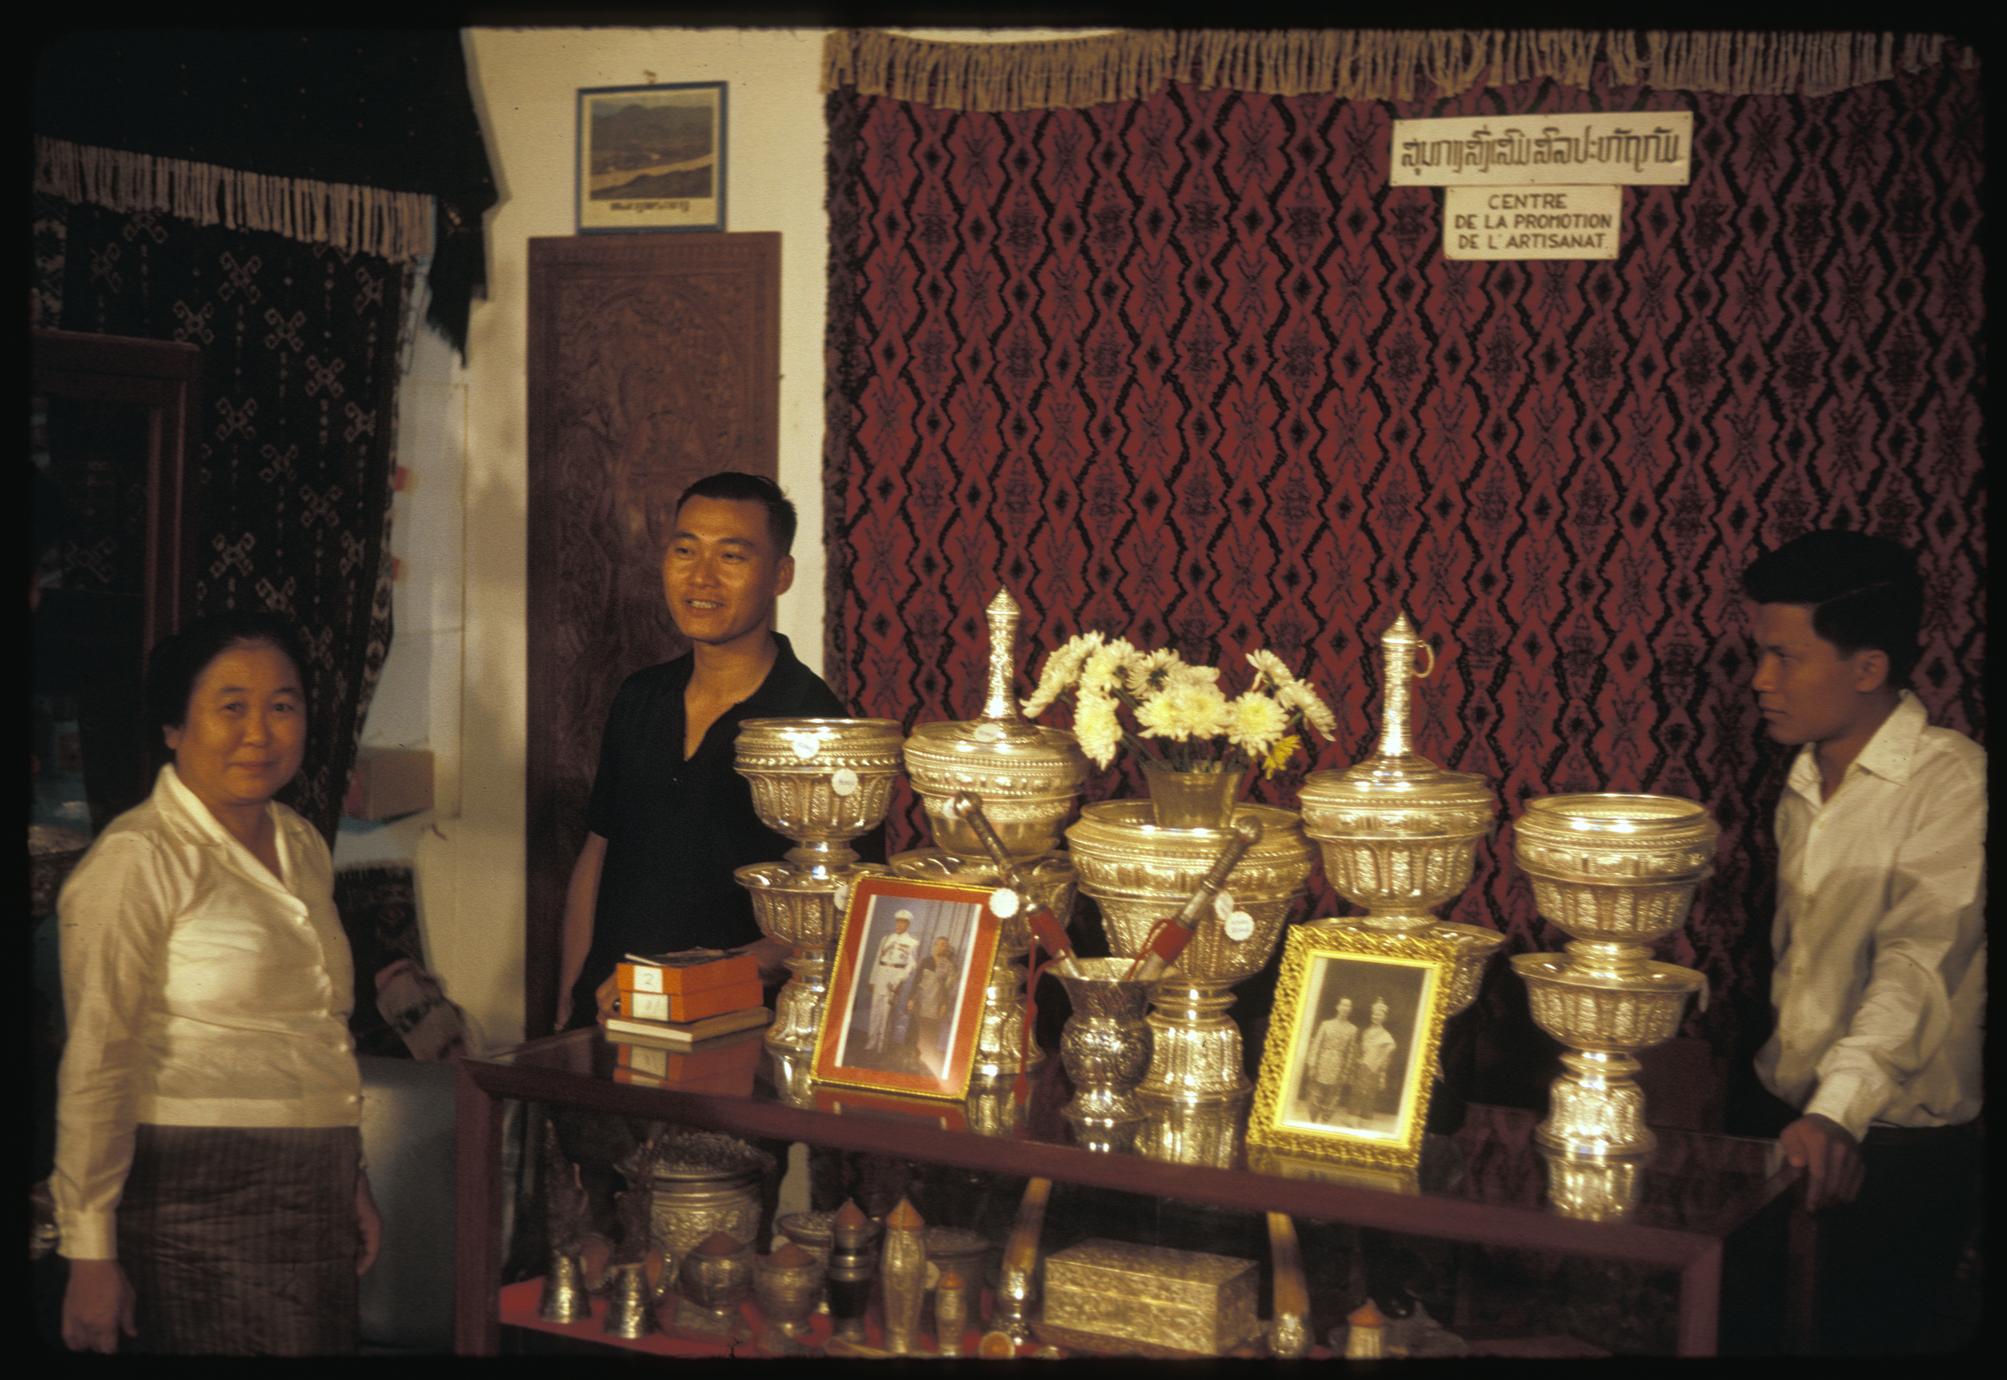 That Luang fair : silversmith exhibit